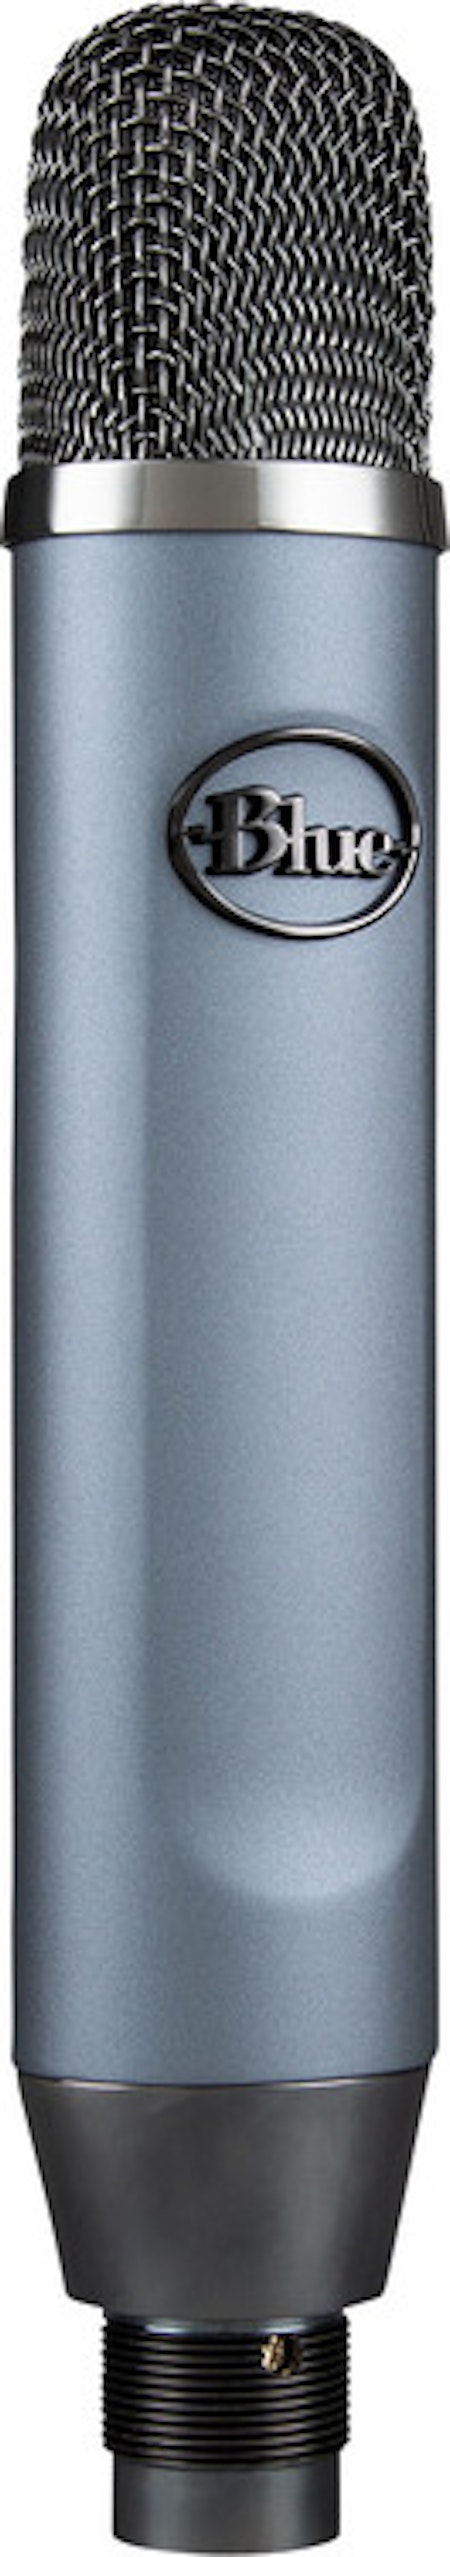 Blue Ember kondensatormikrofon